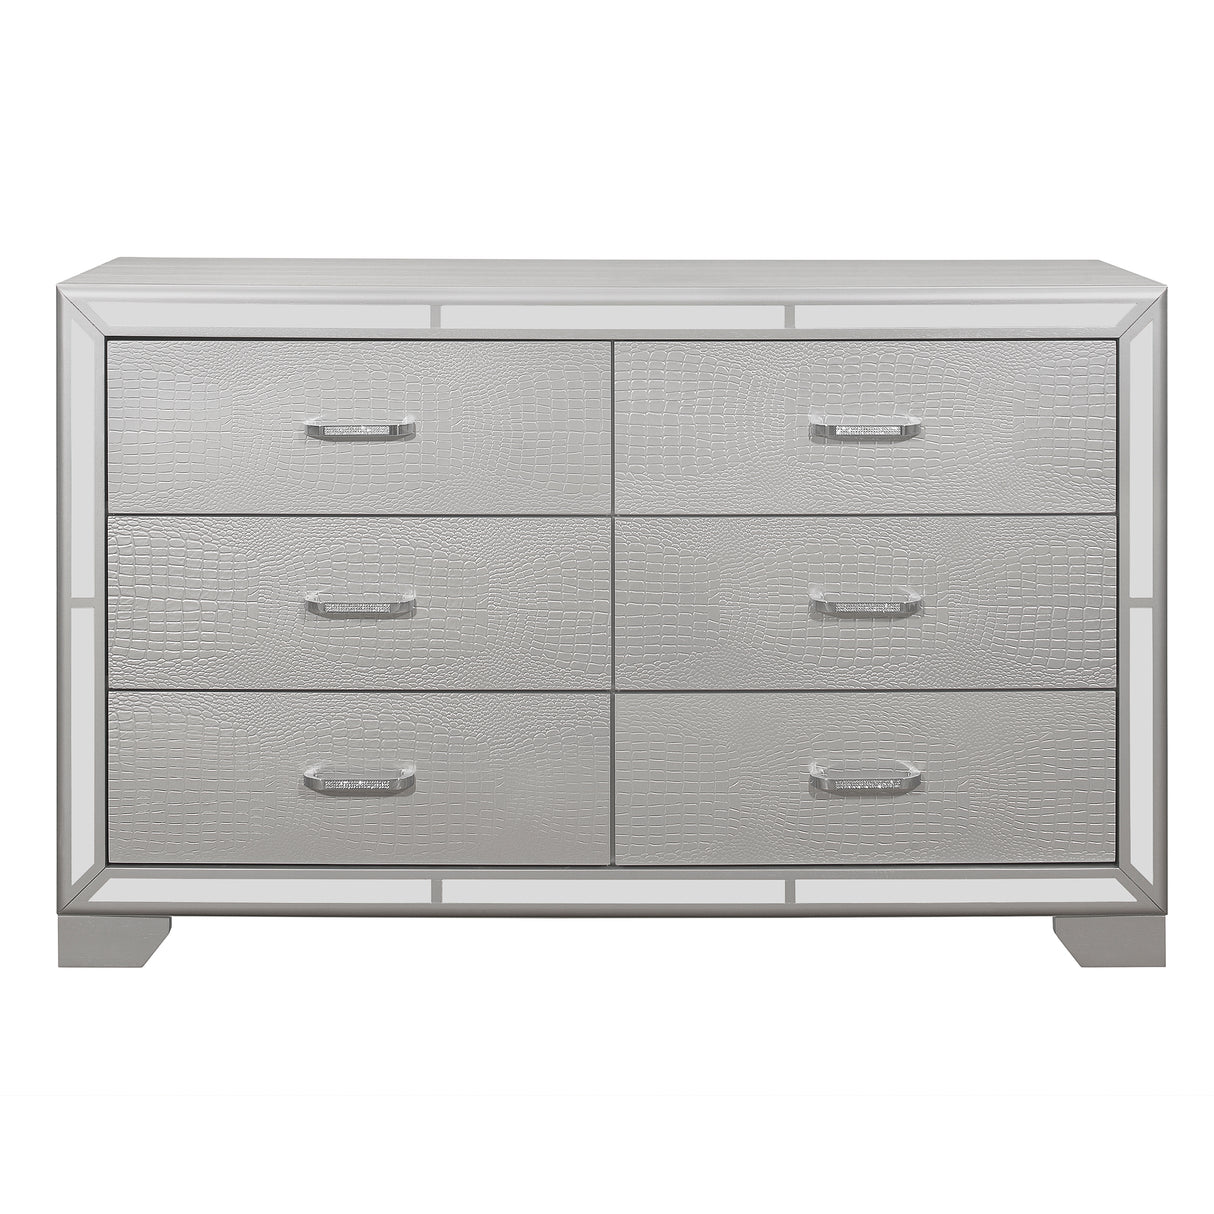 Aveline Silver Dresser - Luna Furniture